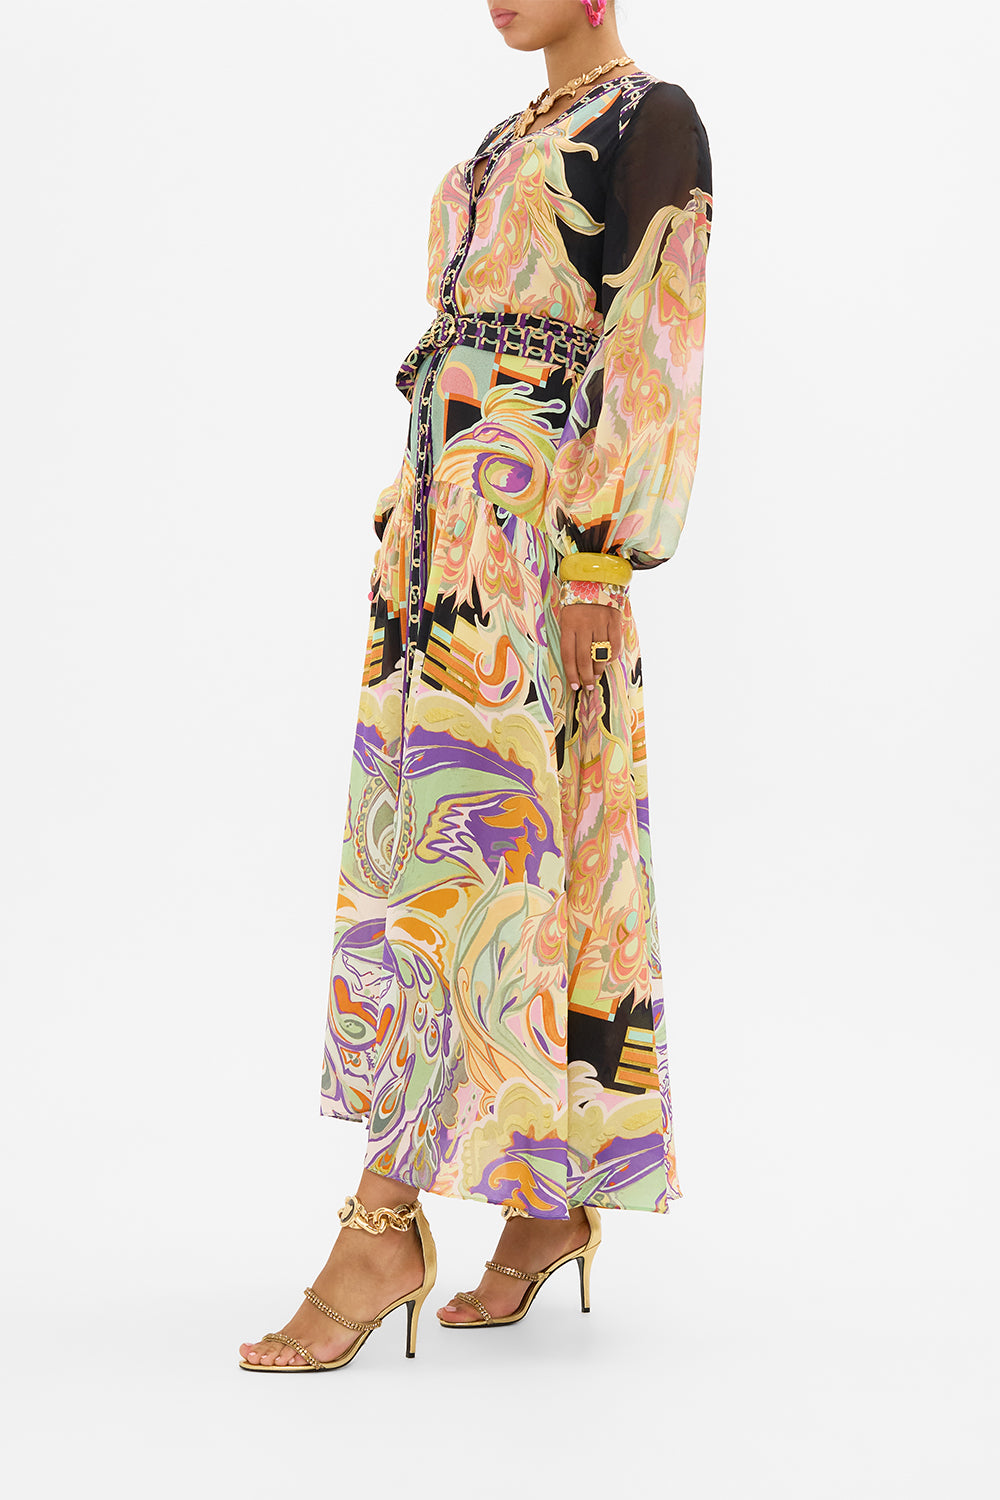 CAMILLA dress with belt in Club Cinemania print